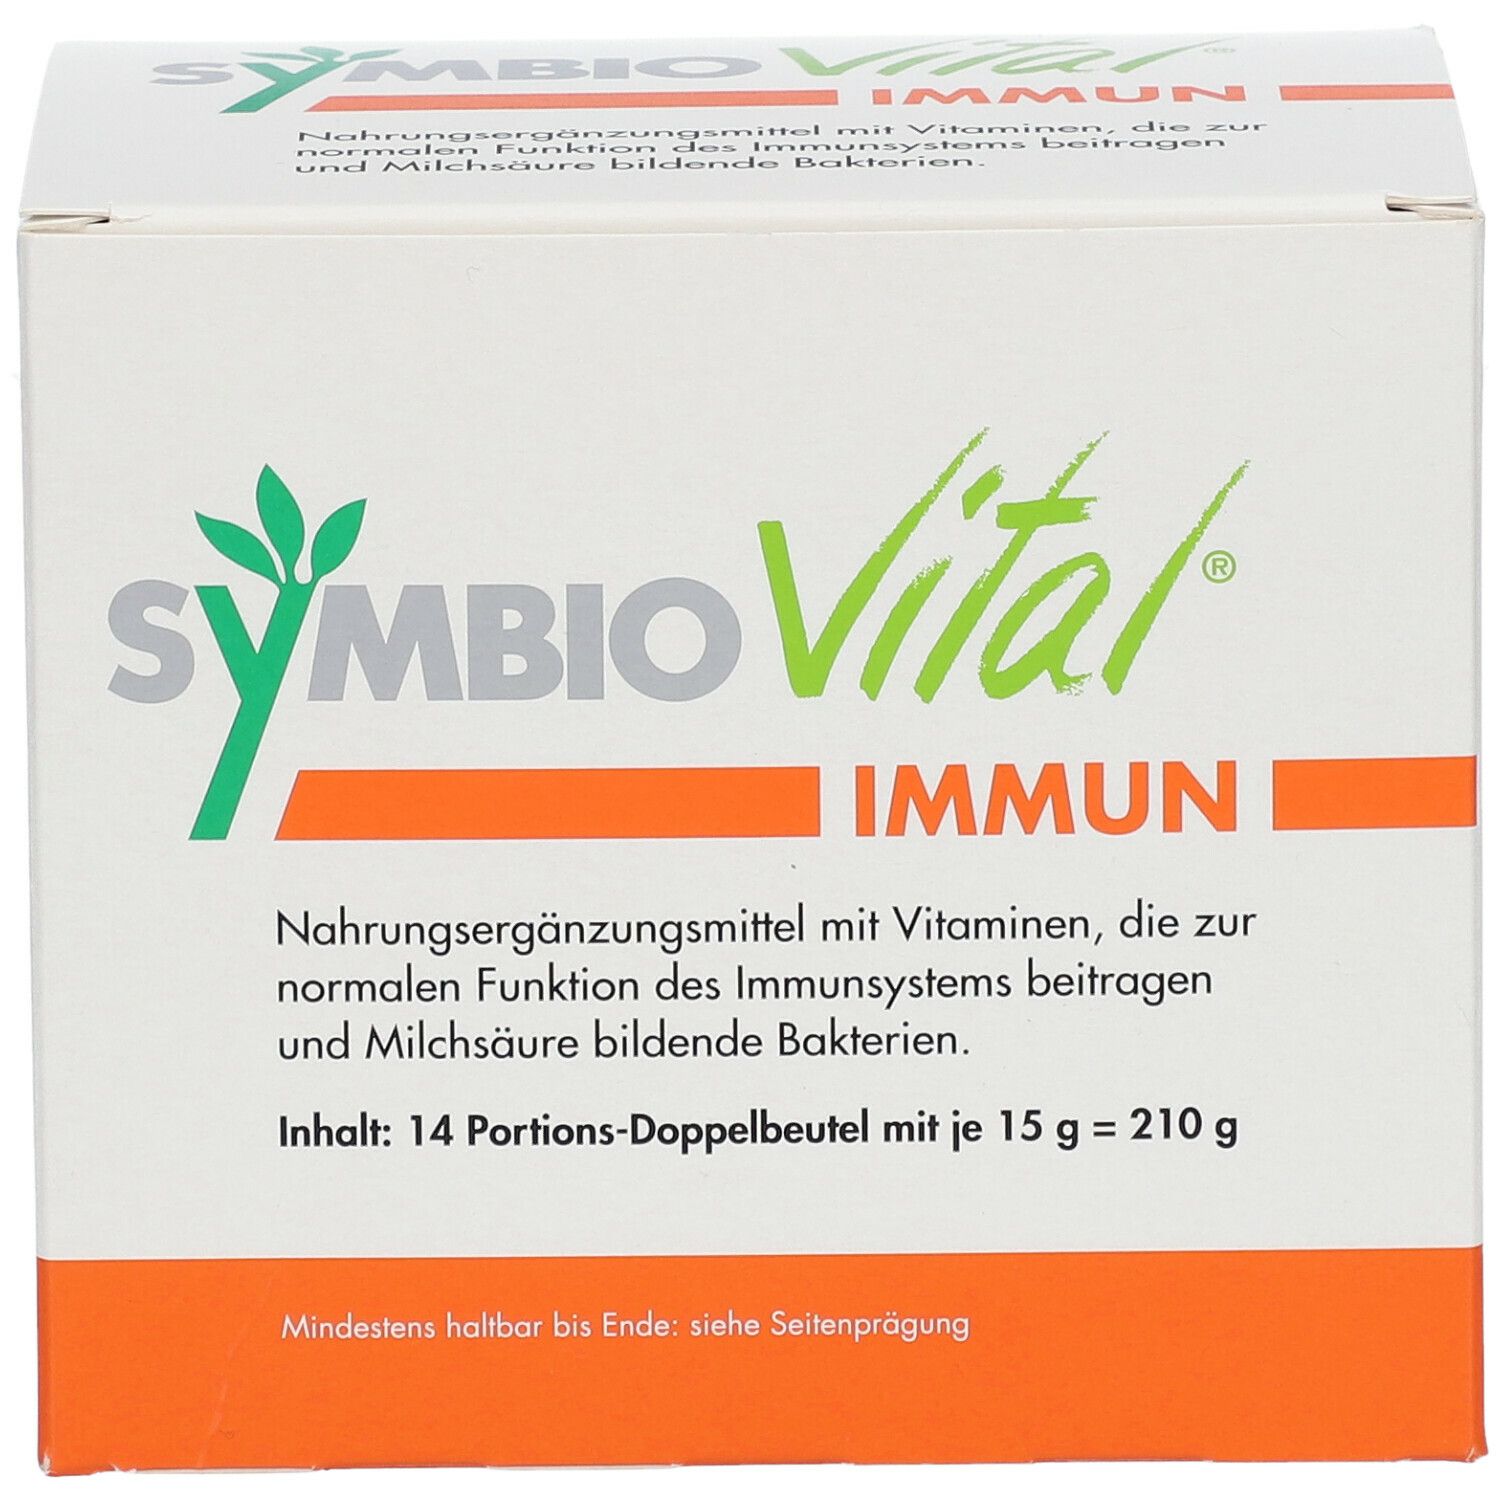 Symbio®Vital Immun